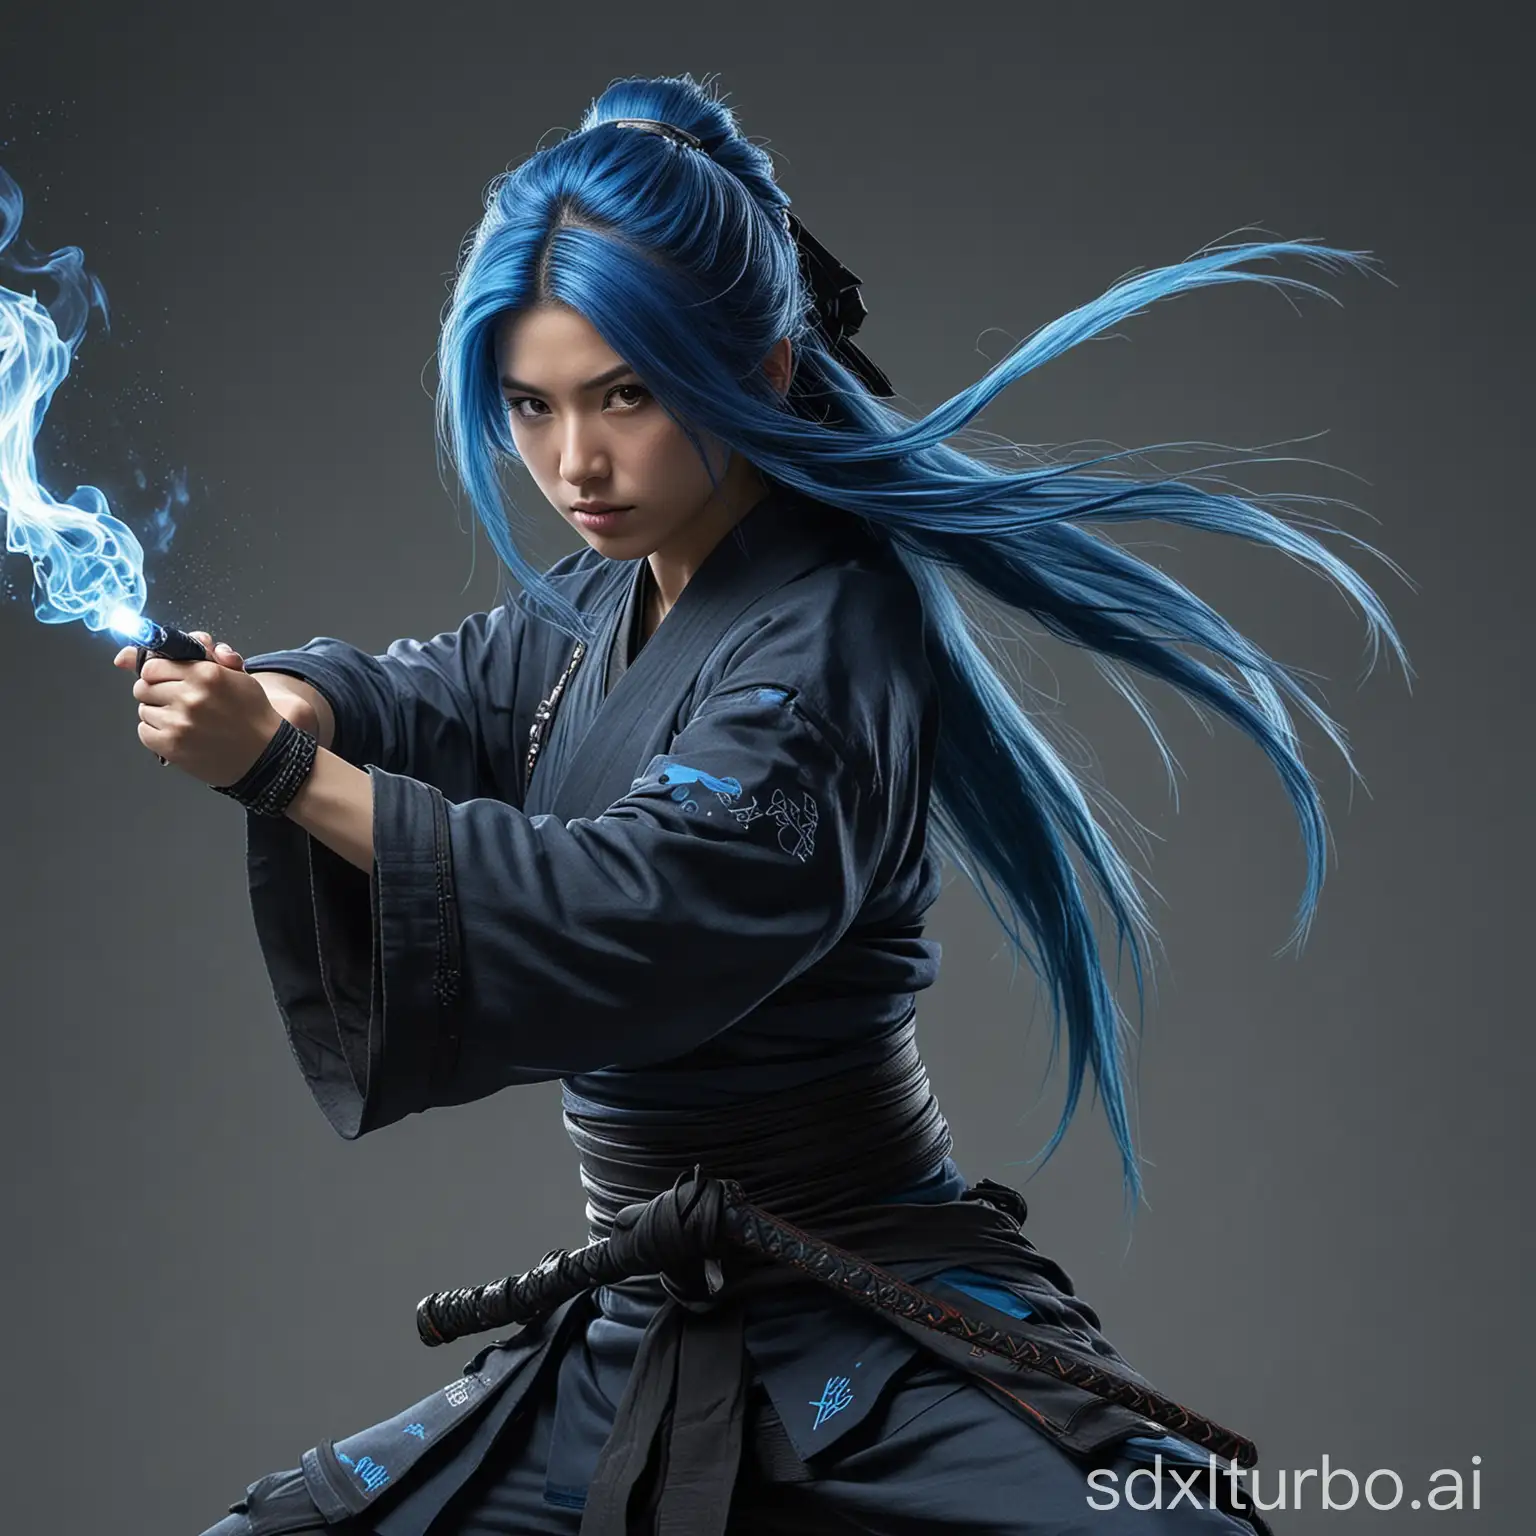 a Japanese ninja girl, long blue fire hair, high quality, high resolution, high precision, realism, color correction, proper lighting settings, harmonious composition